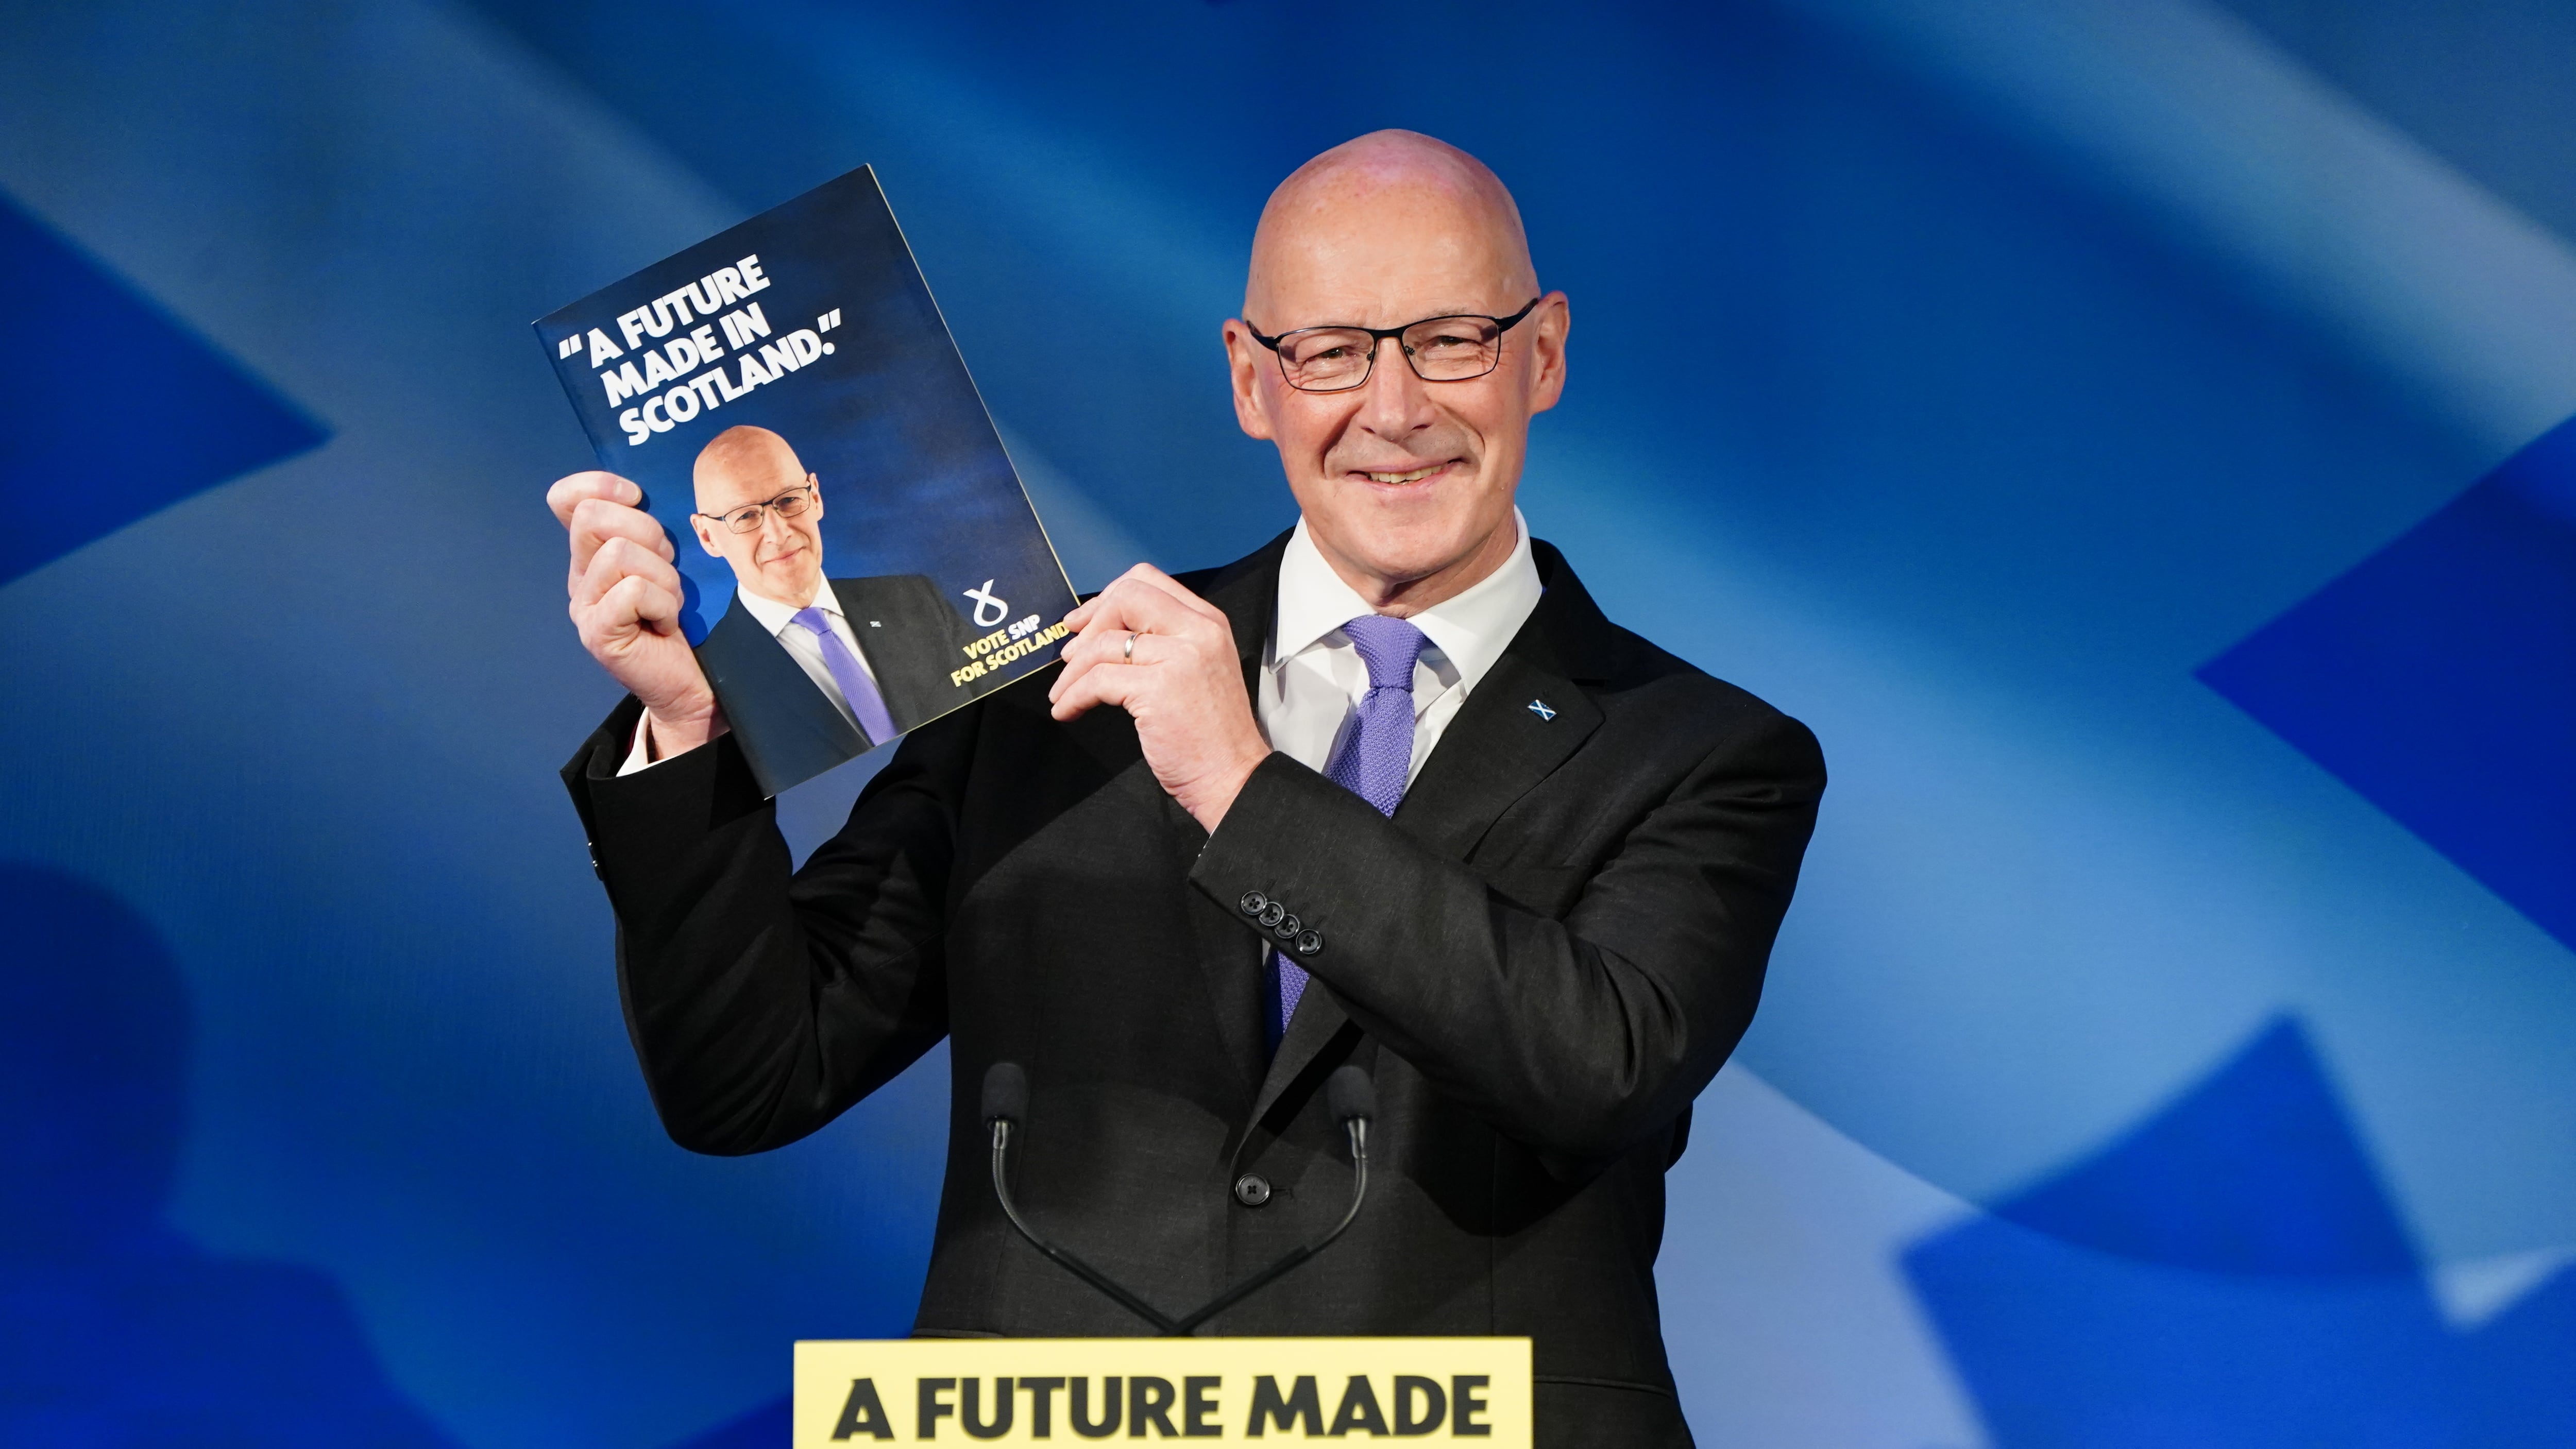 First Minister John Swinney launched the SNP manifesto in Edinburgh on Wednesday